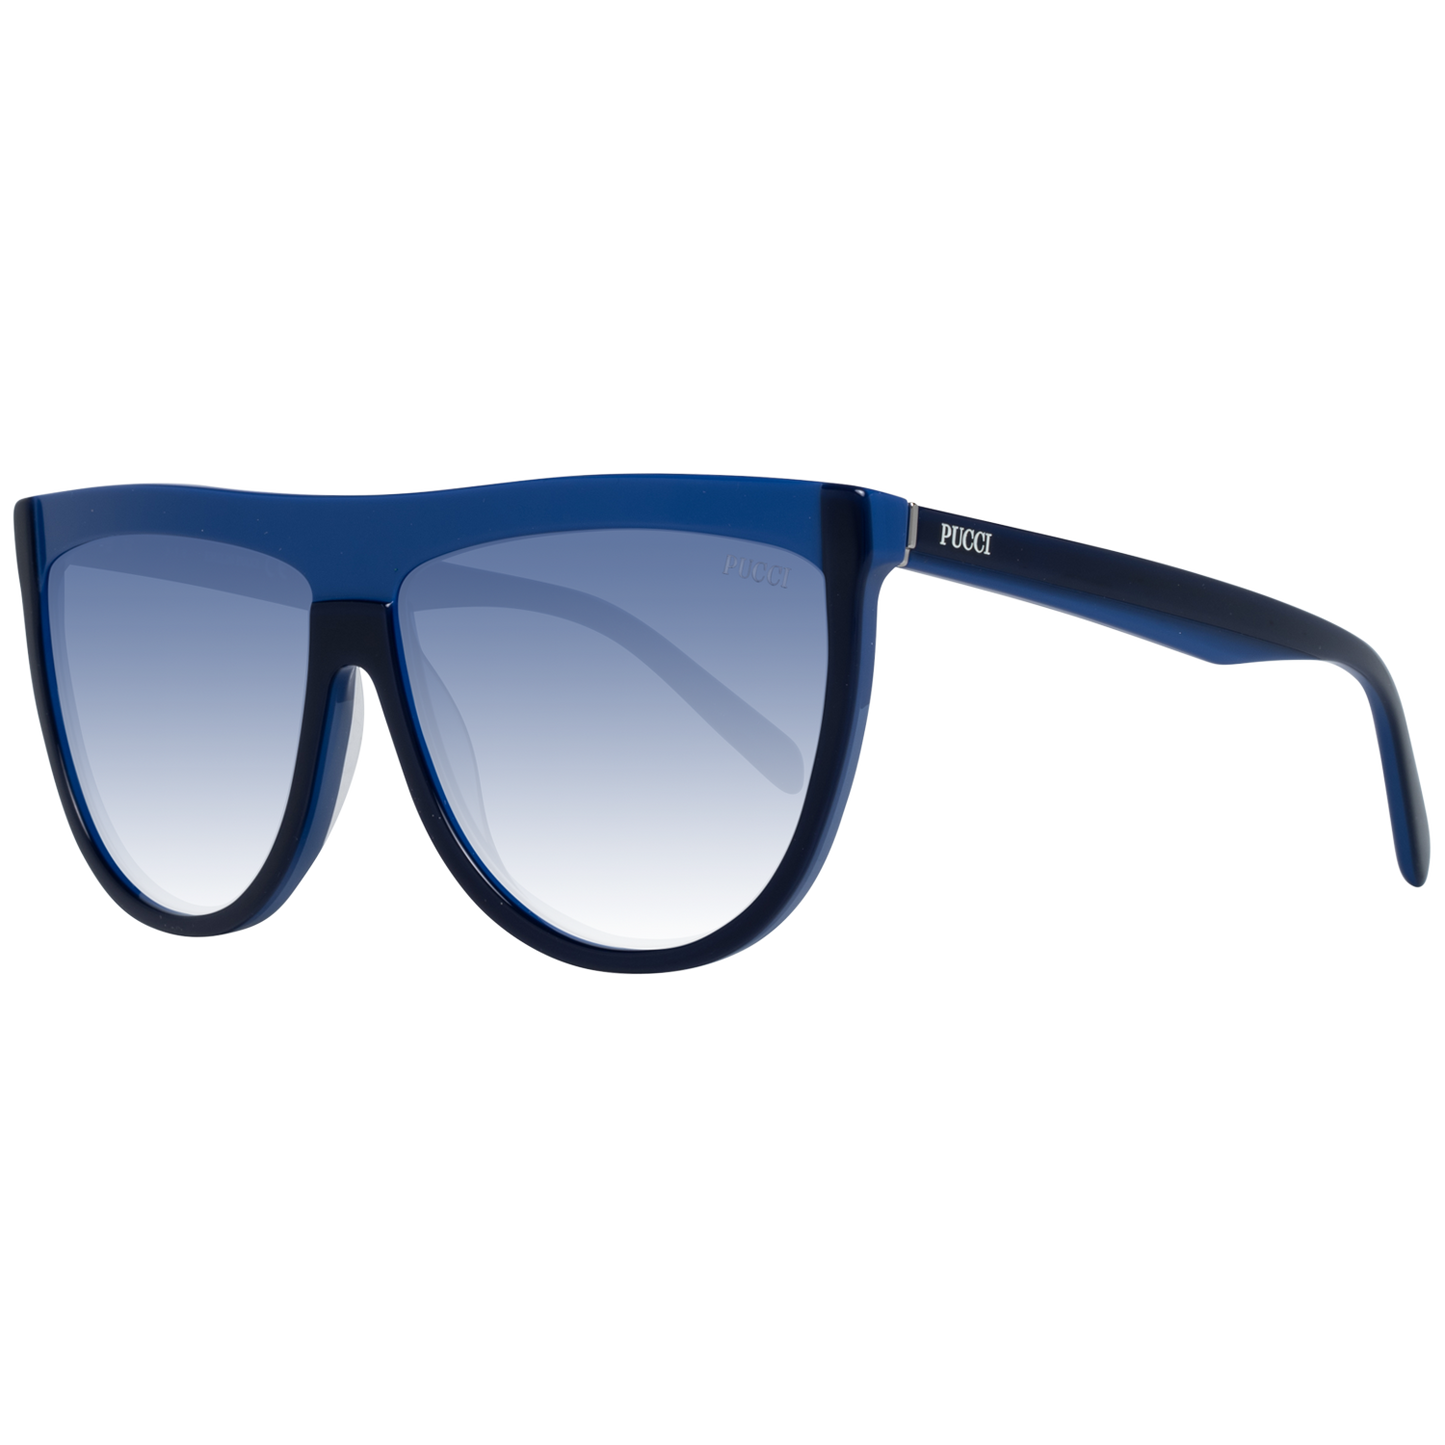 Emilio Pucci Oval Sunglasses in Light Blue